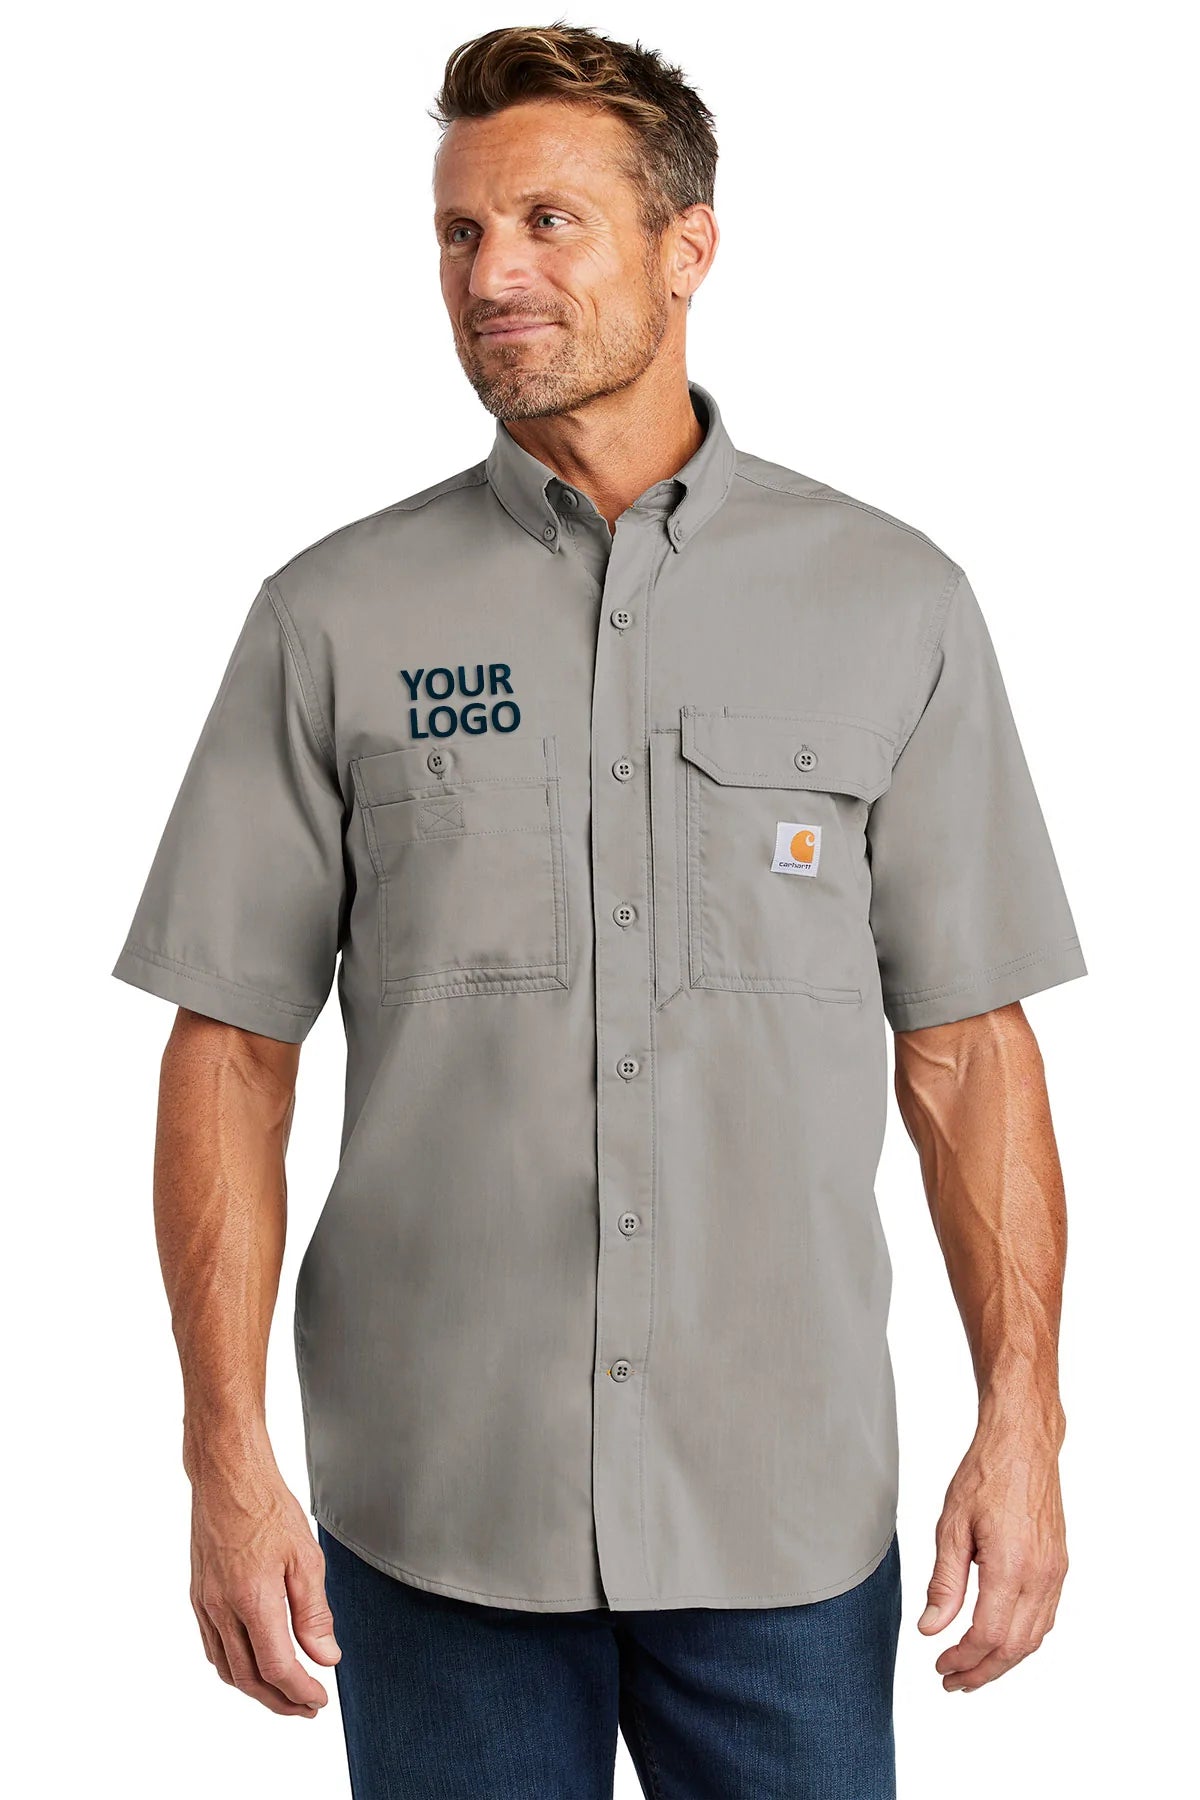 Carhartt Force Ridgefield Solid Custom Shirts, Asphalt